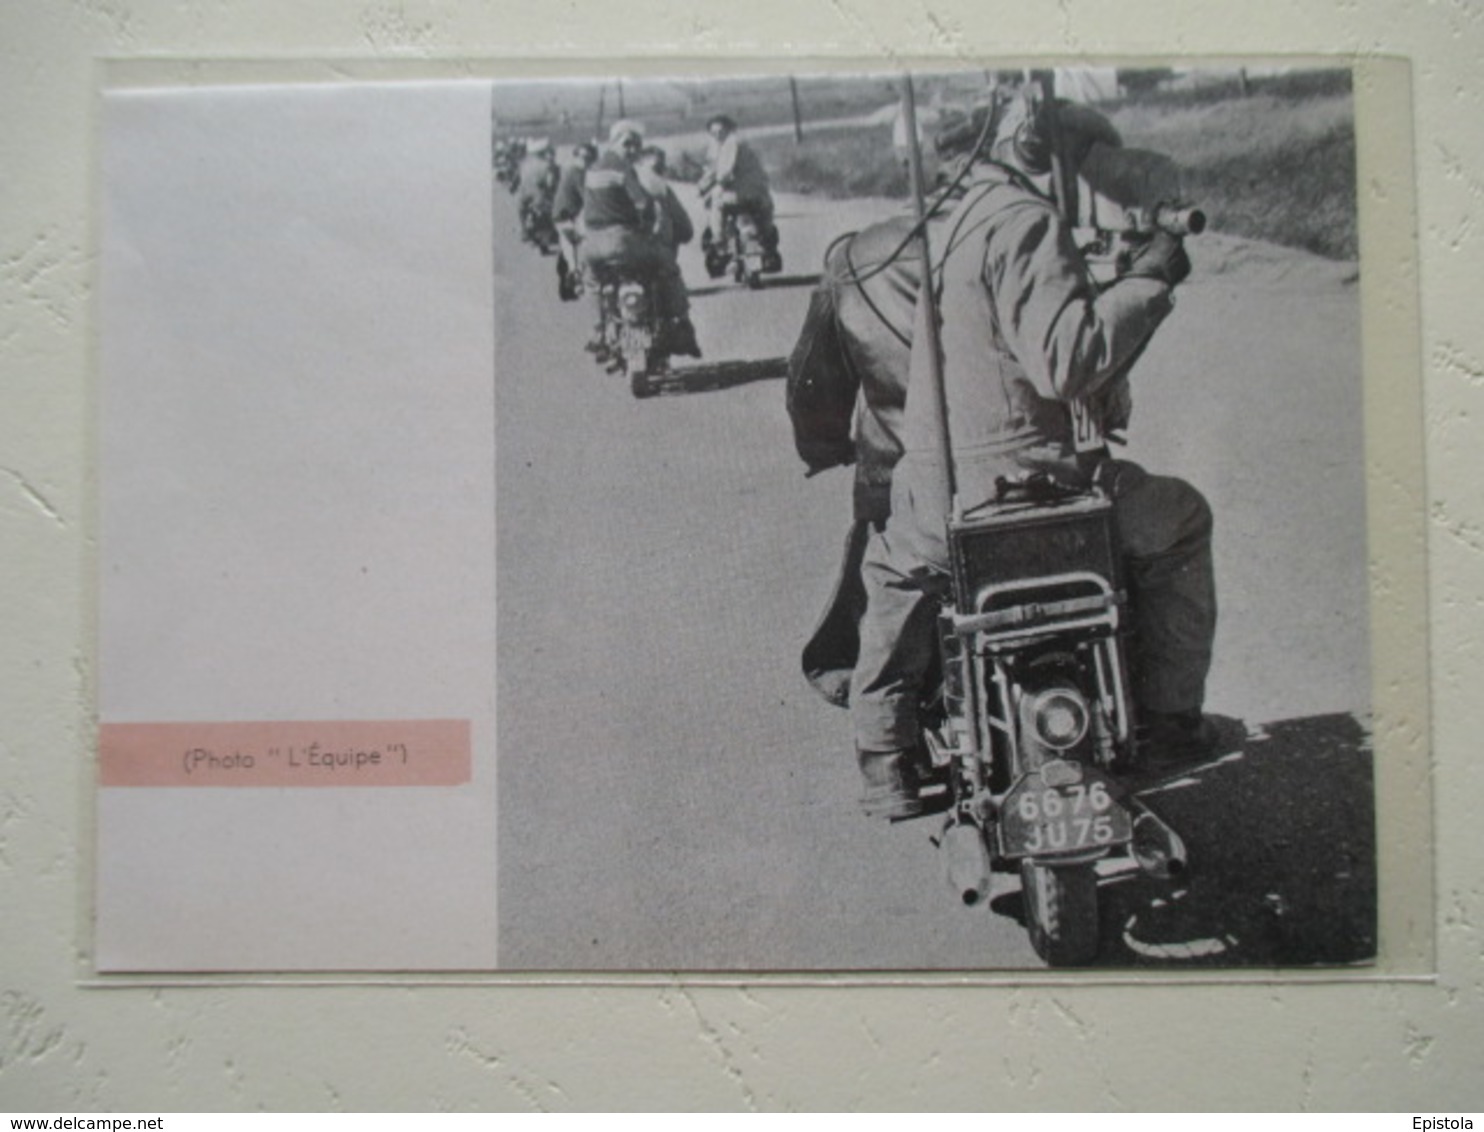 Motocyclette  "  MOTO Motard  Cameraman Du Tour De France  " - Coupure De Presse De 1961 - Motos